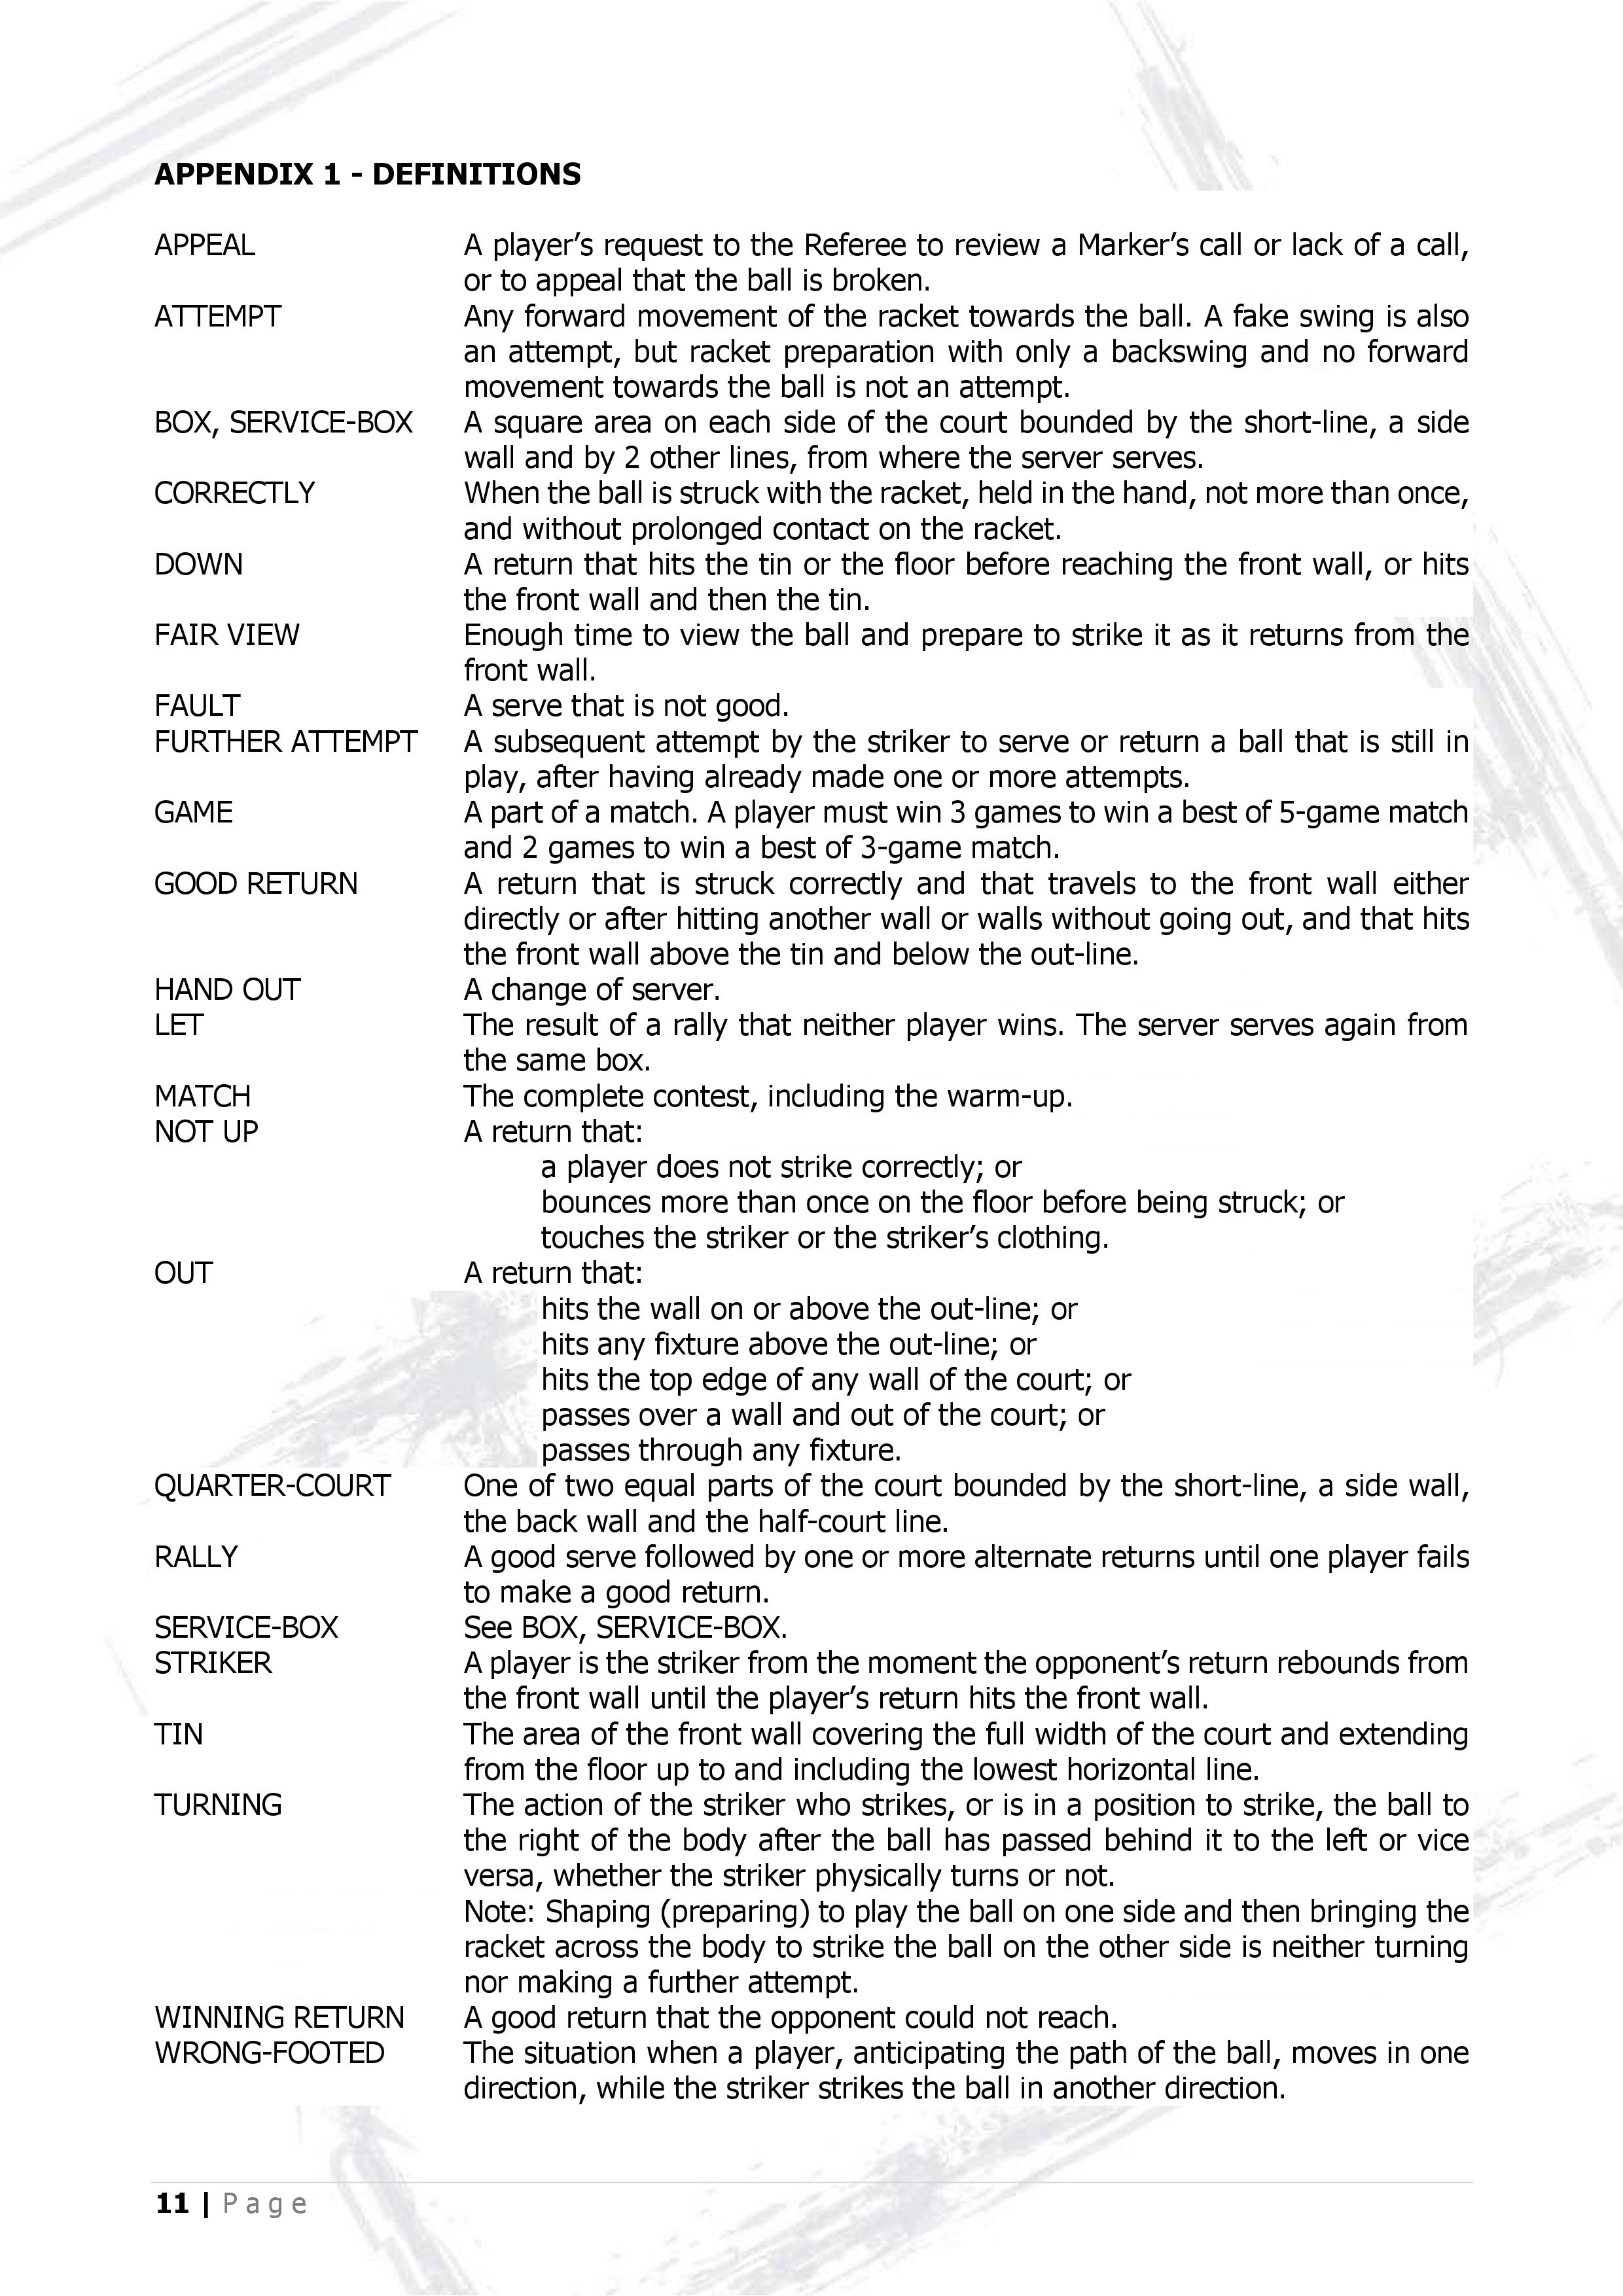 World Squash Federation Rules - Global Squash Coach - Page 13.jpg